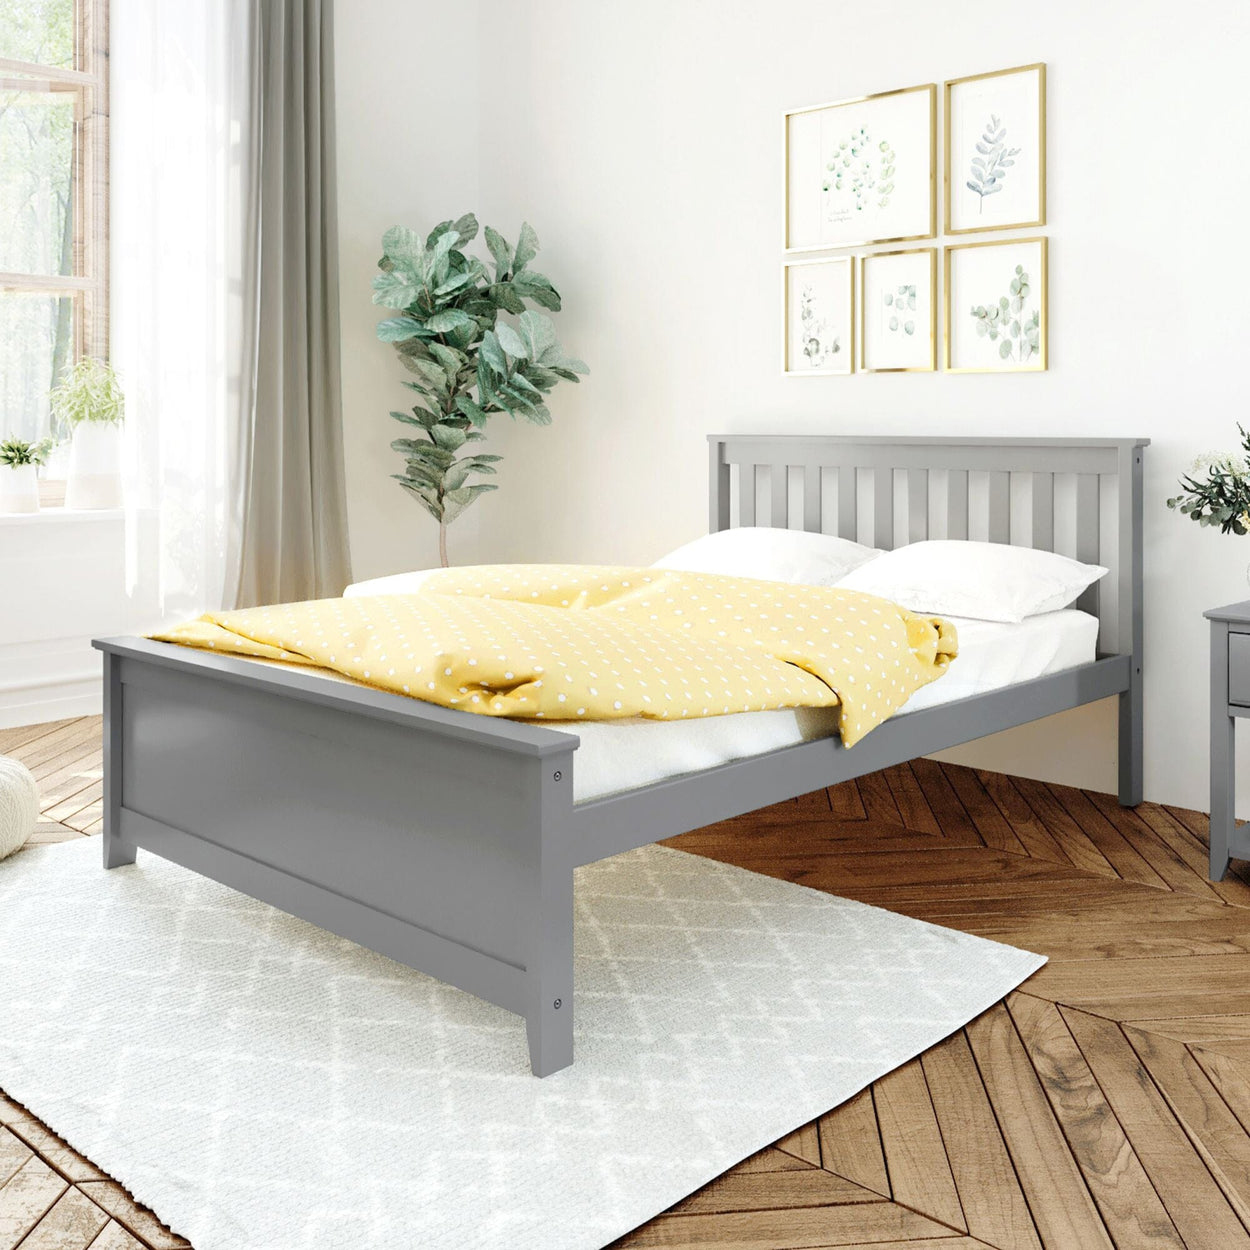 180211-121 : Kids Beds Classic Full-Size Platform Bed, Grey